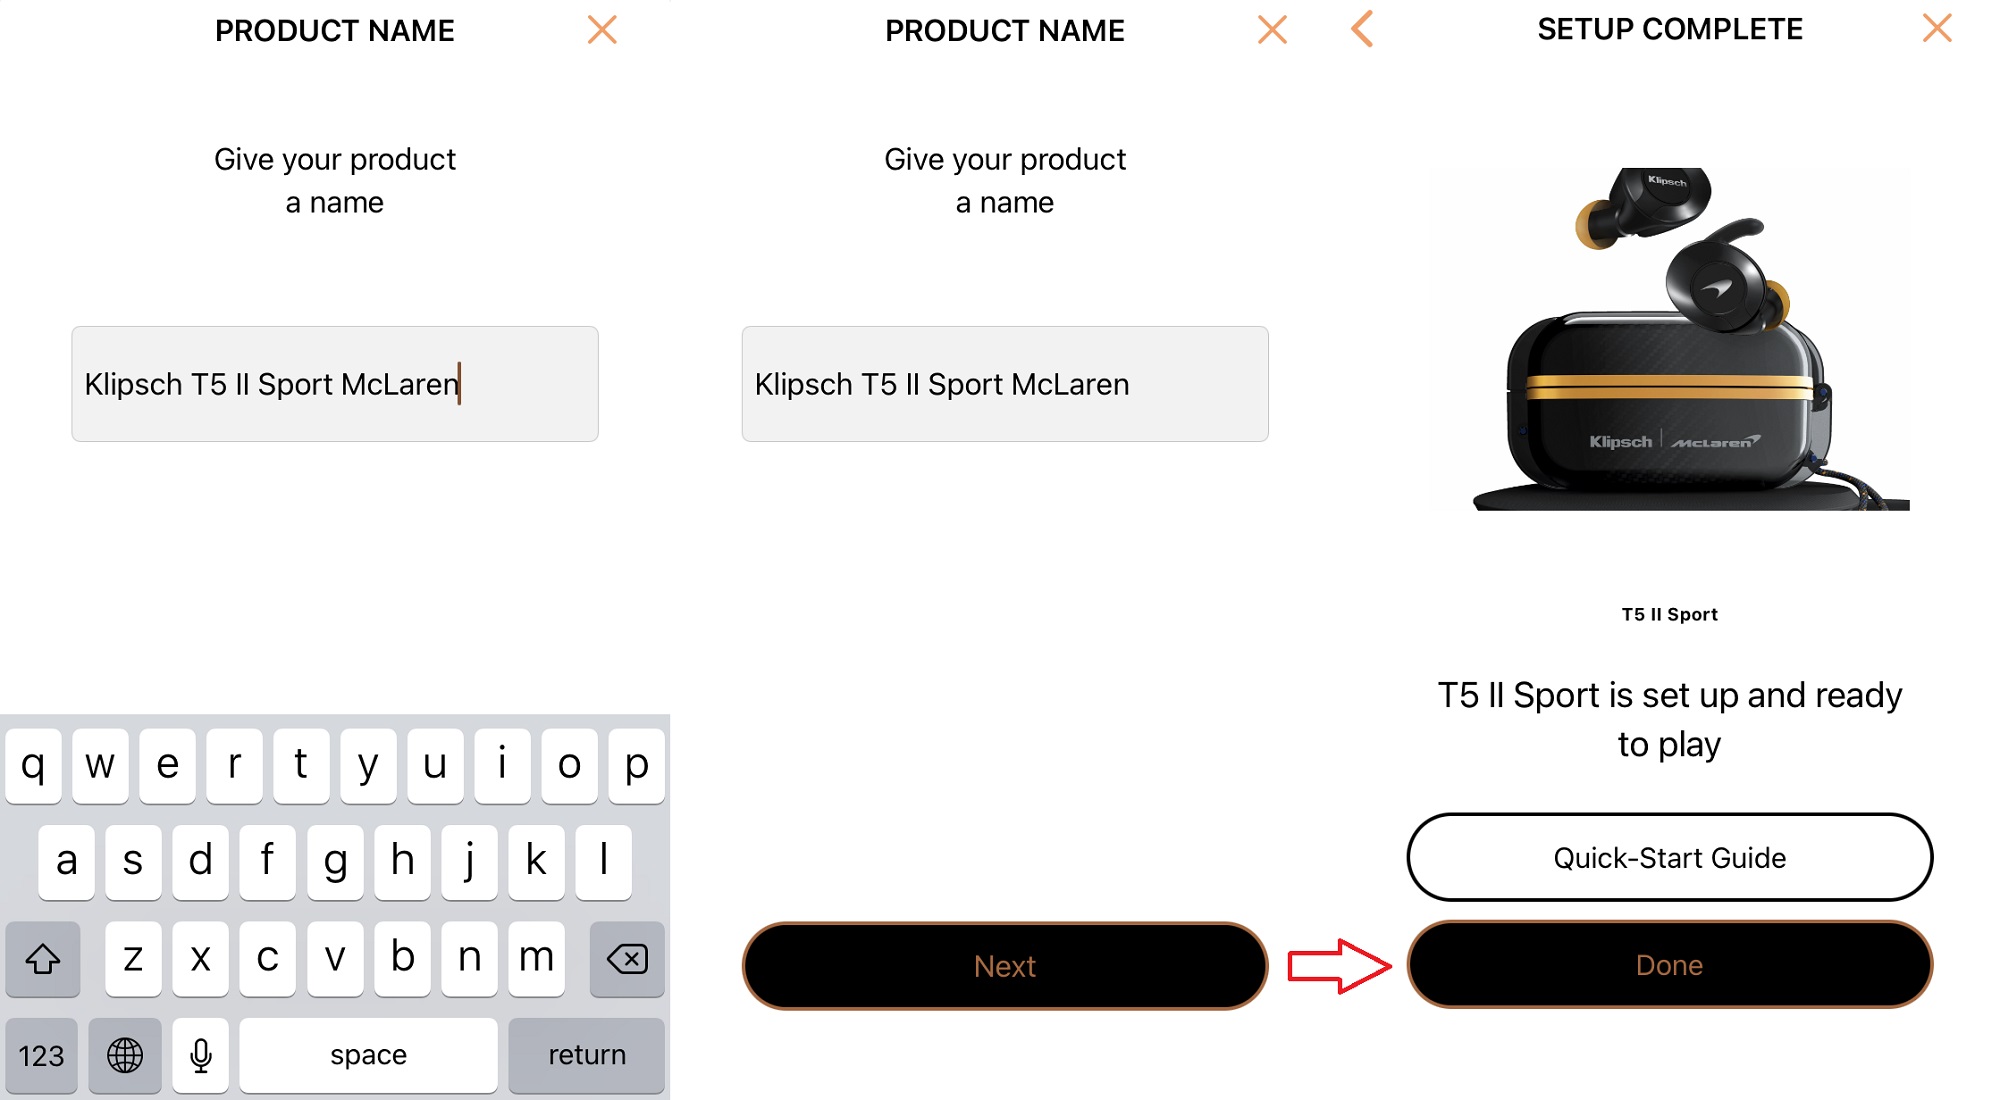 Klipsch T5 II True Wireless Sport McLaren Edition | Anh Duy Audio